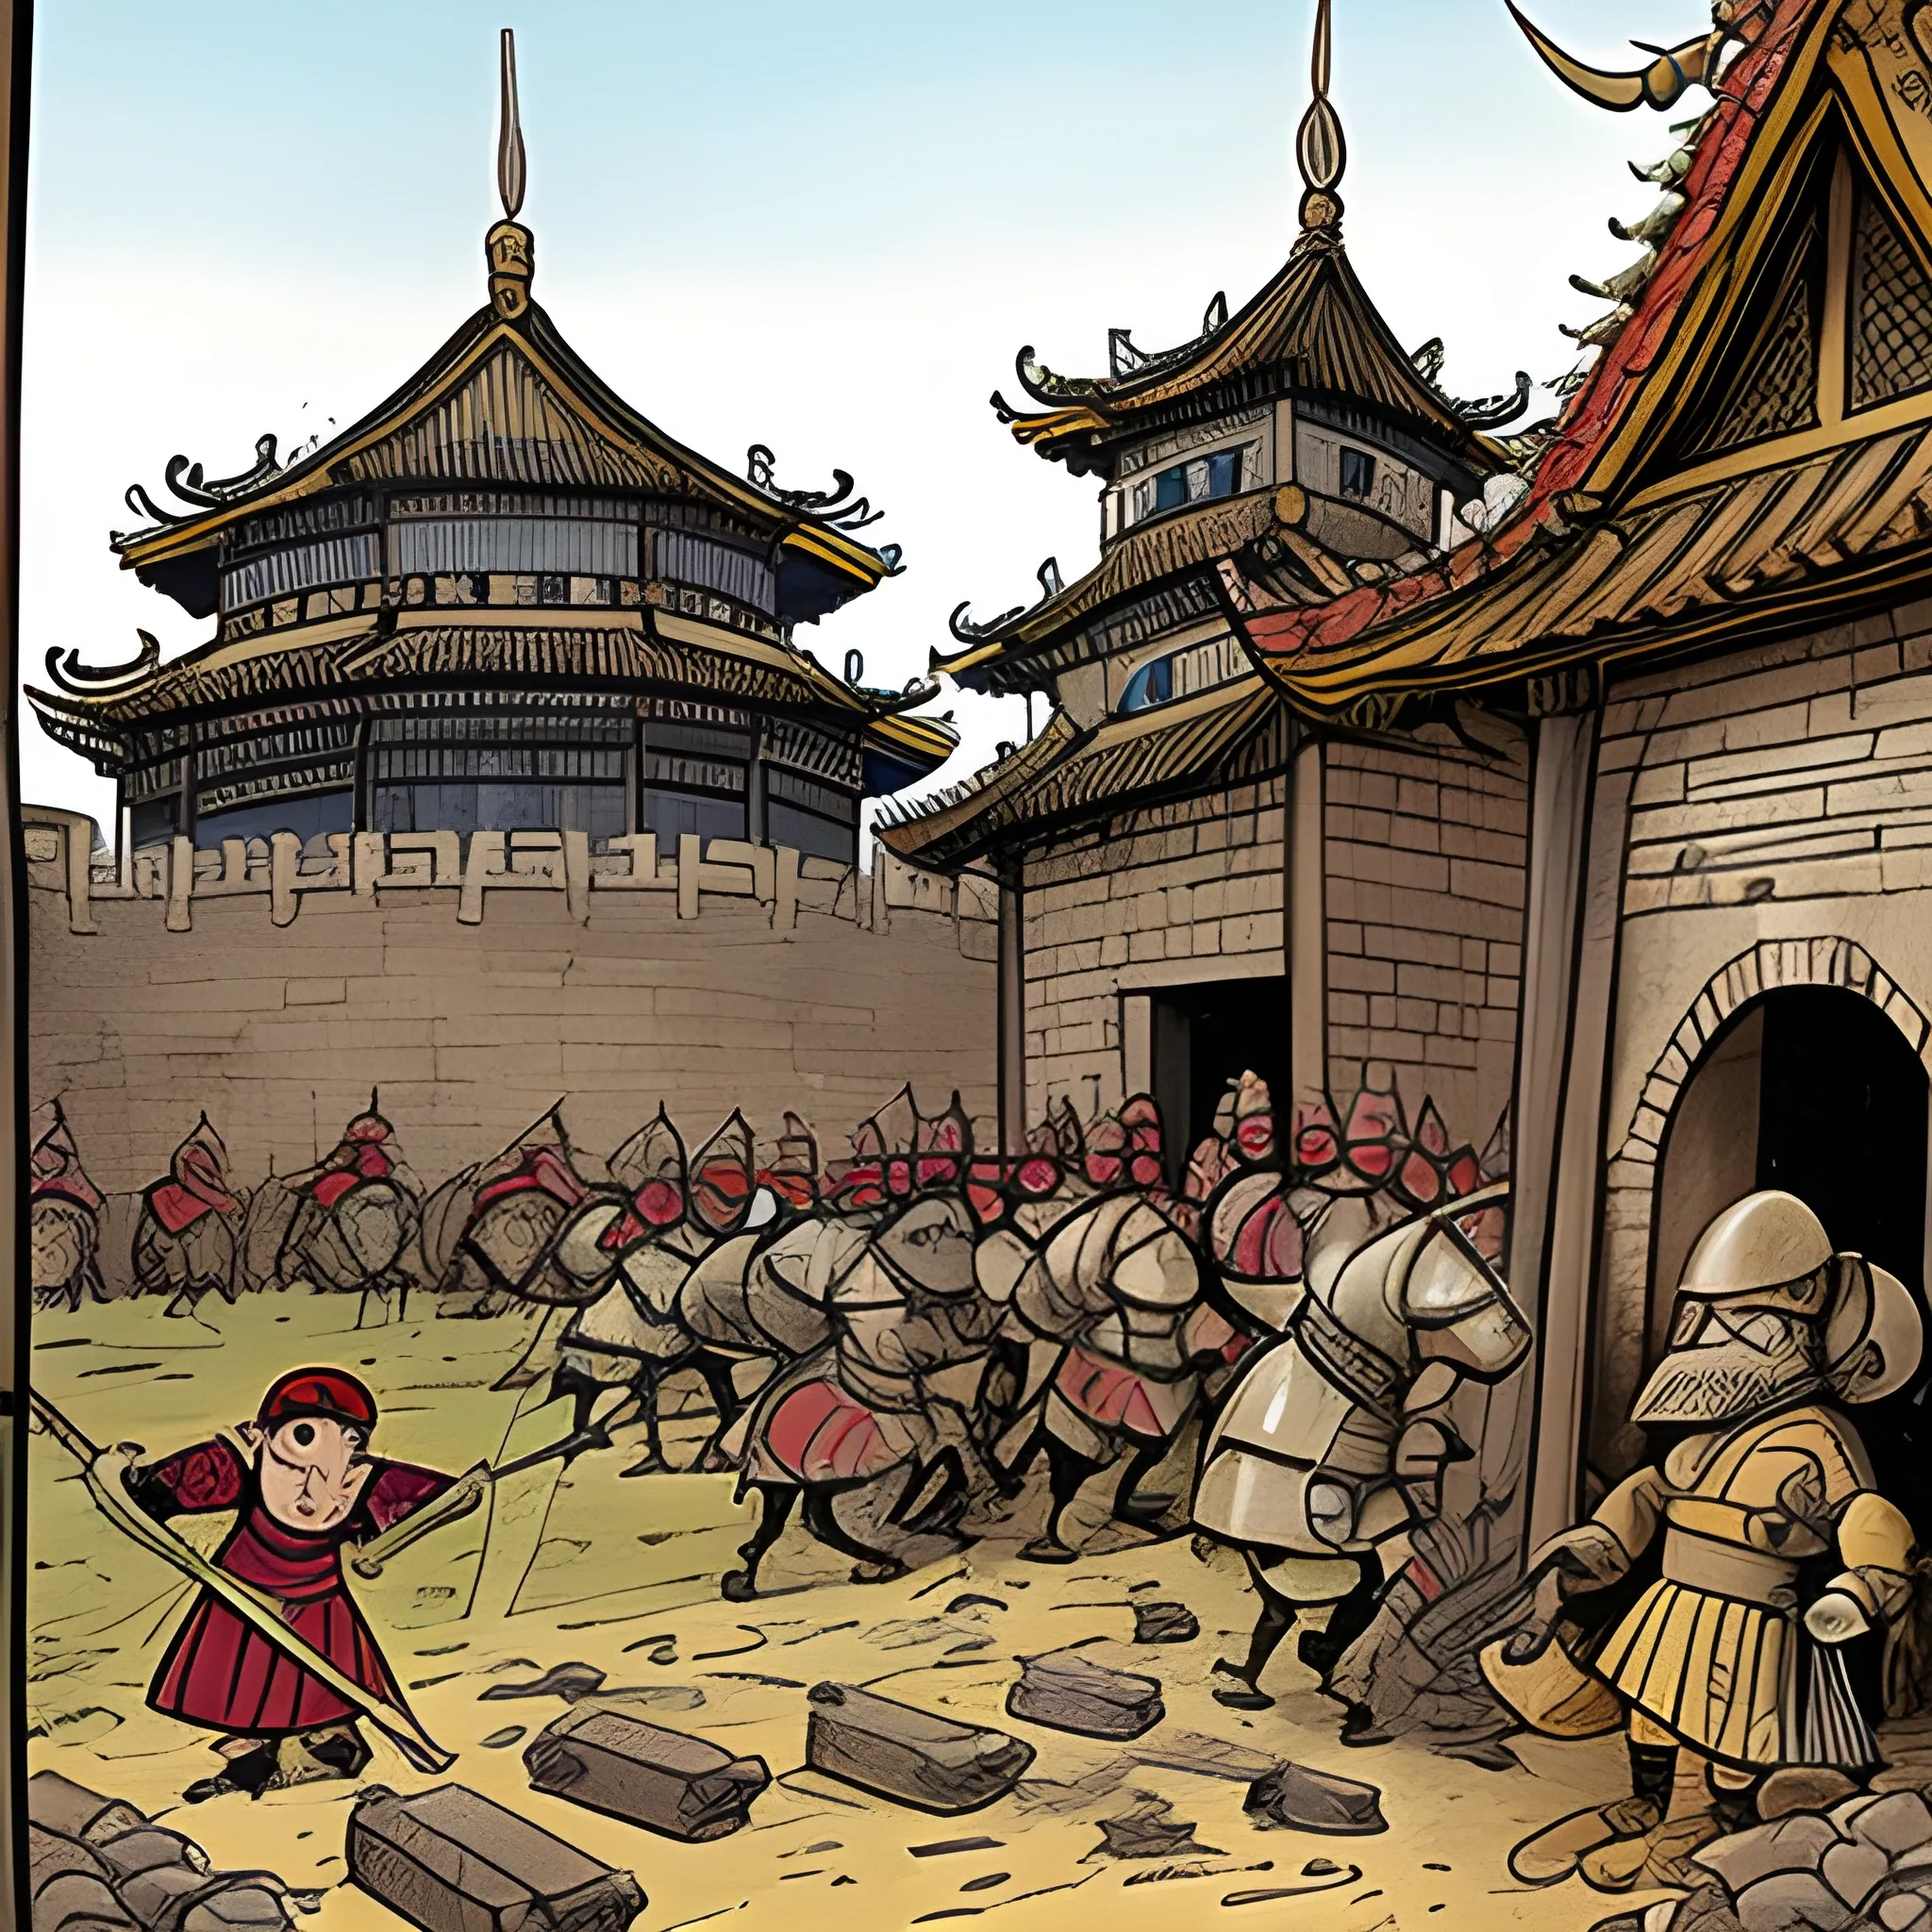 post medieval war scene in china

, Cartoon